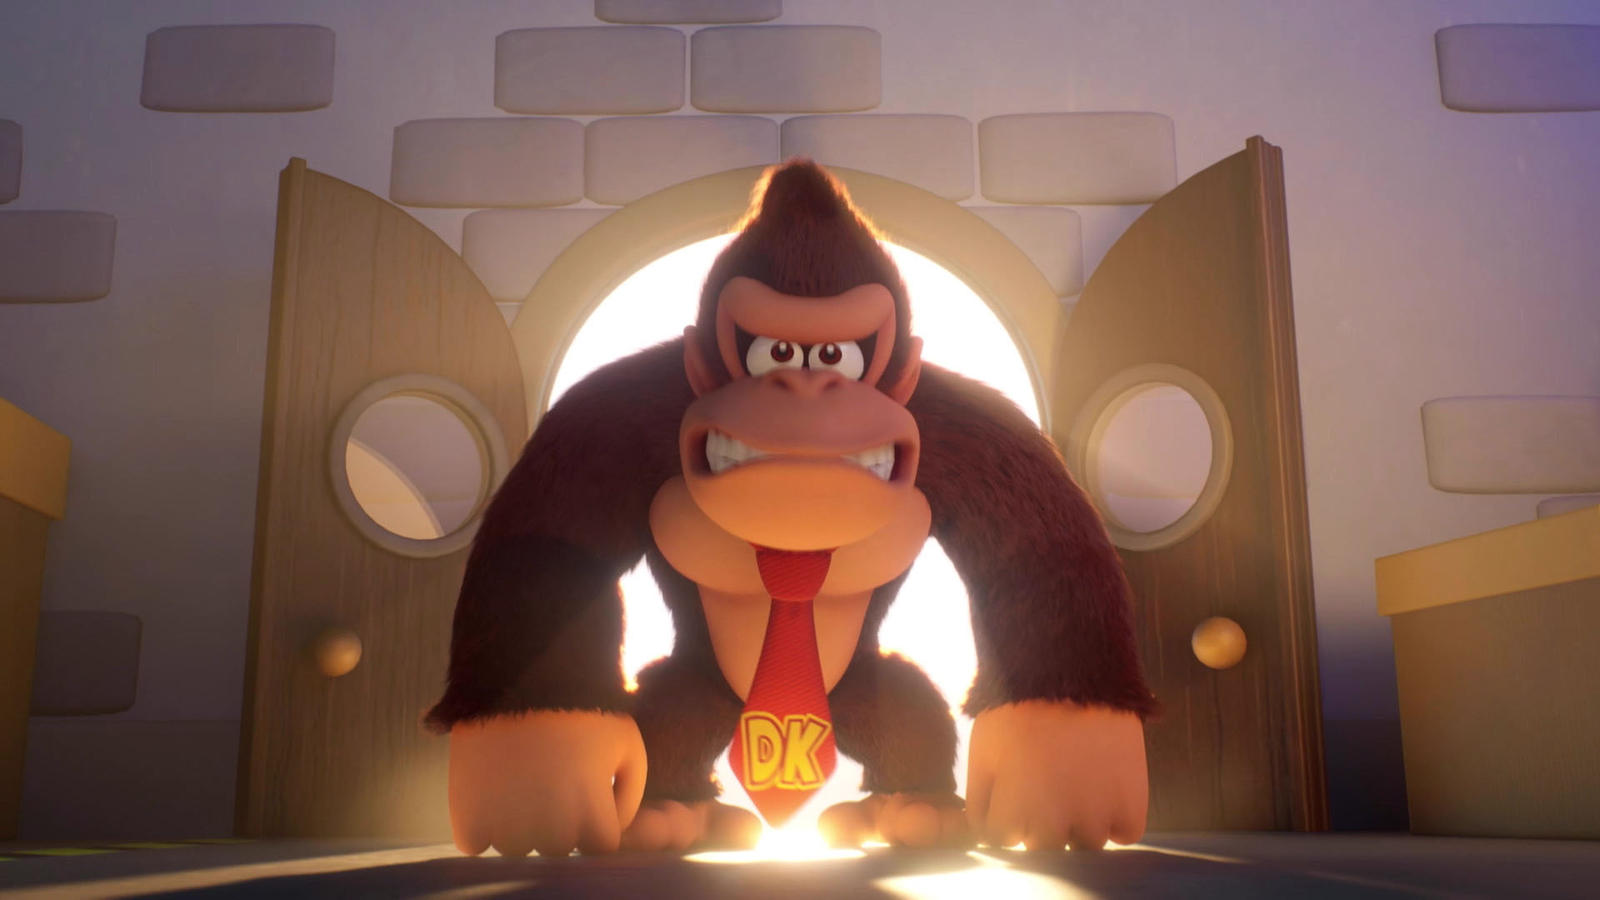 Mario Vs Donkey Kong Returns to the Nintendo Switch